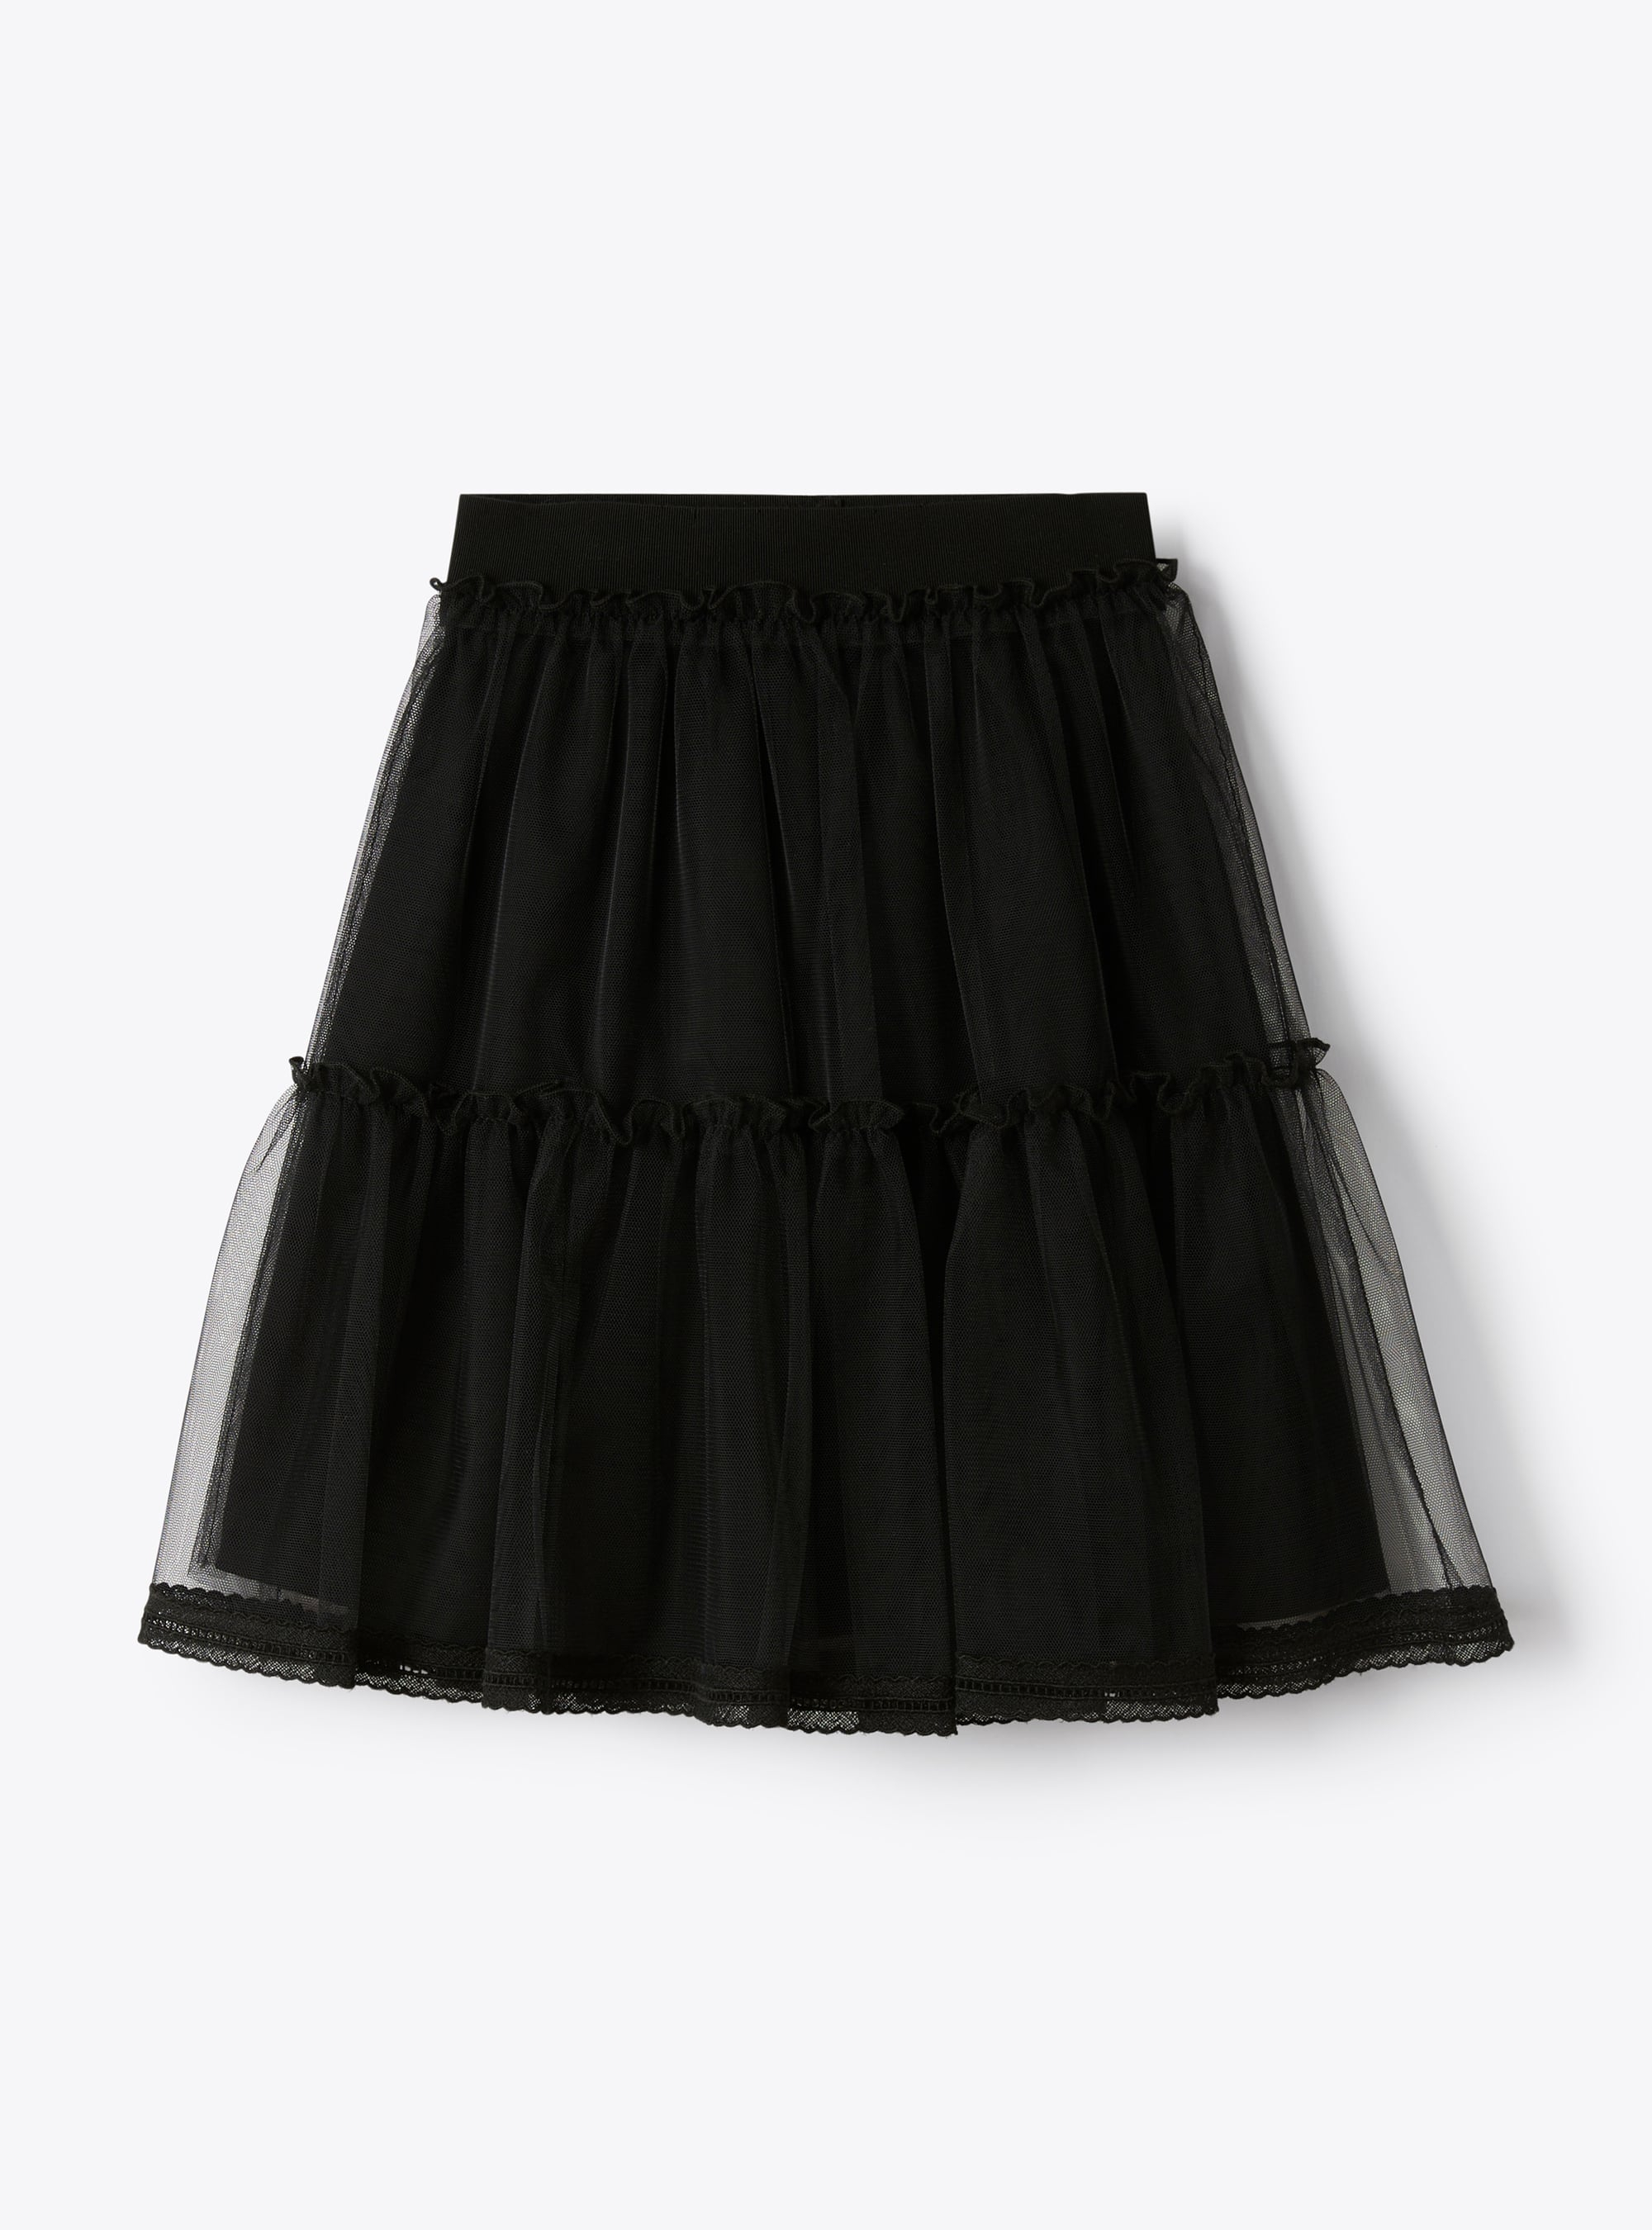 Black tulle skirt with tonal edges - Skirts - Il Gufo